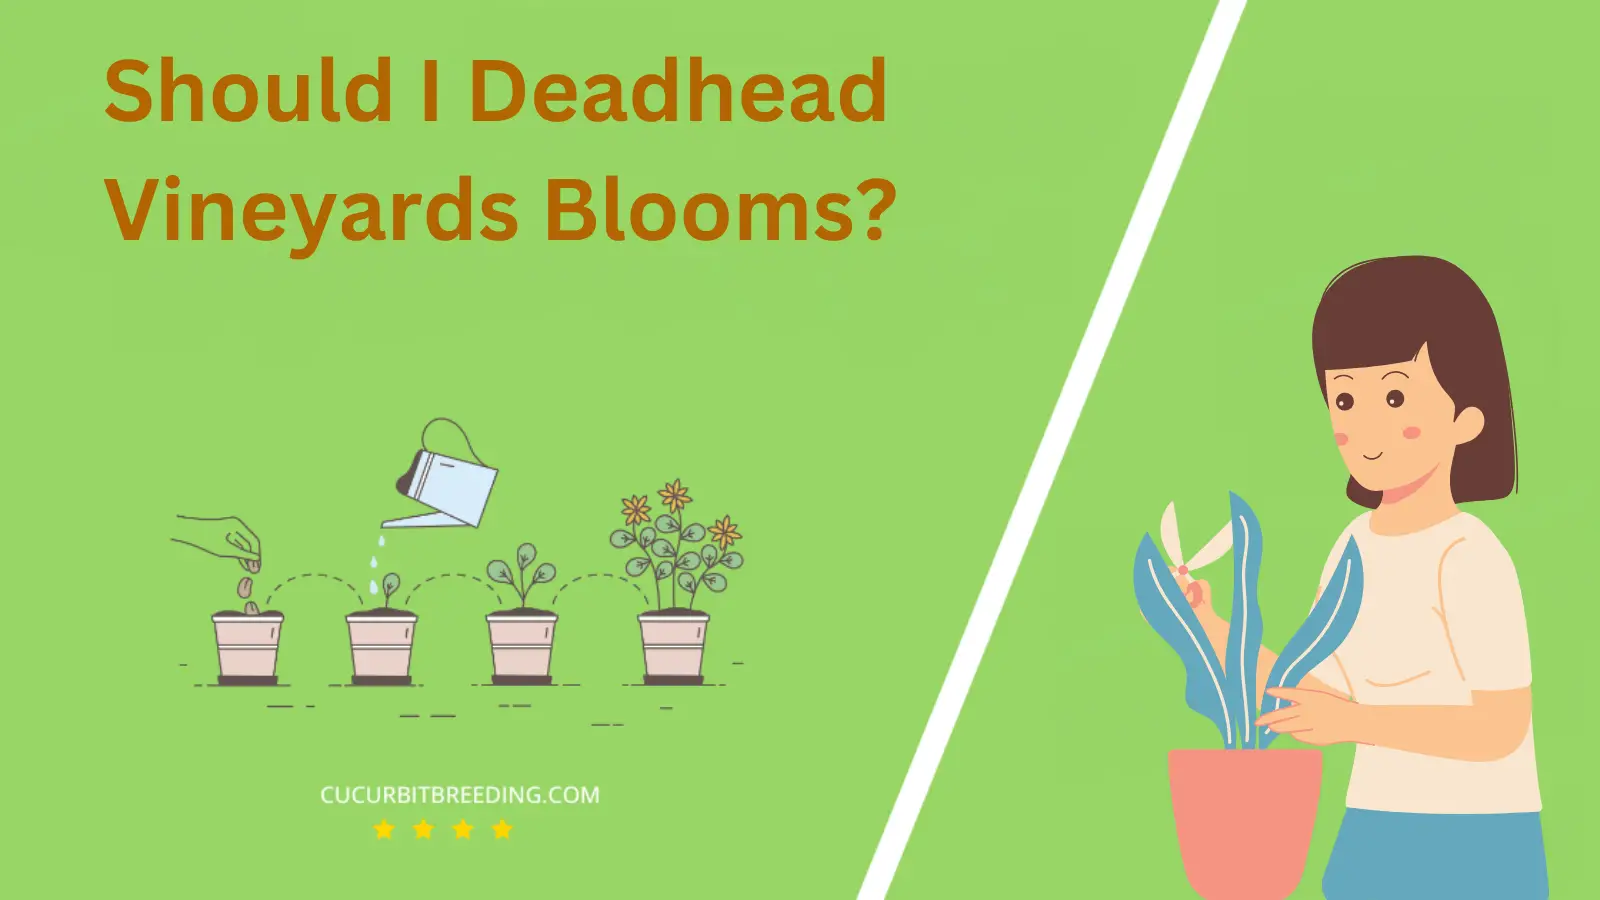 Should I Deadhead Vineyards Blooms?